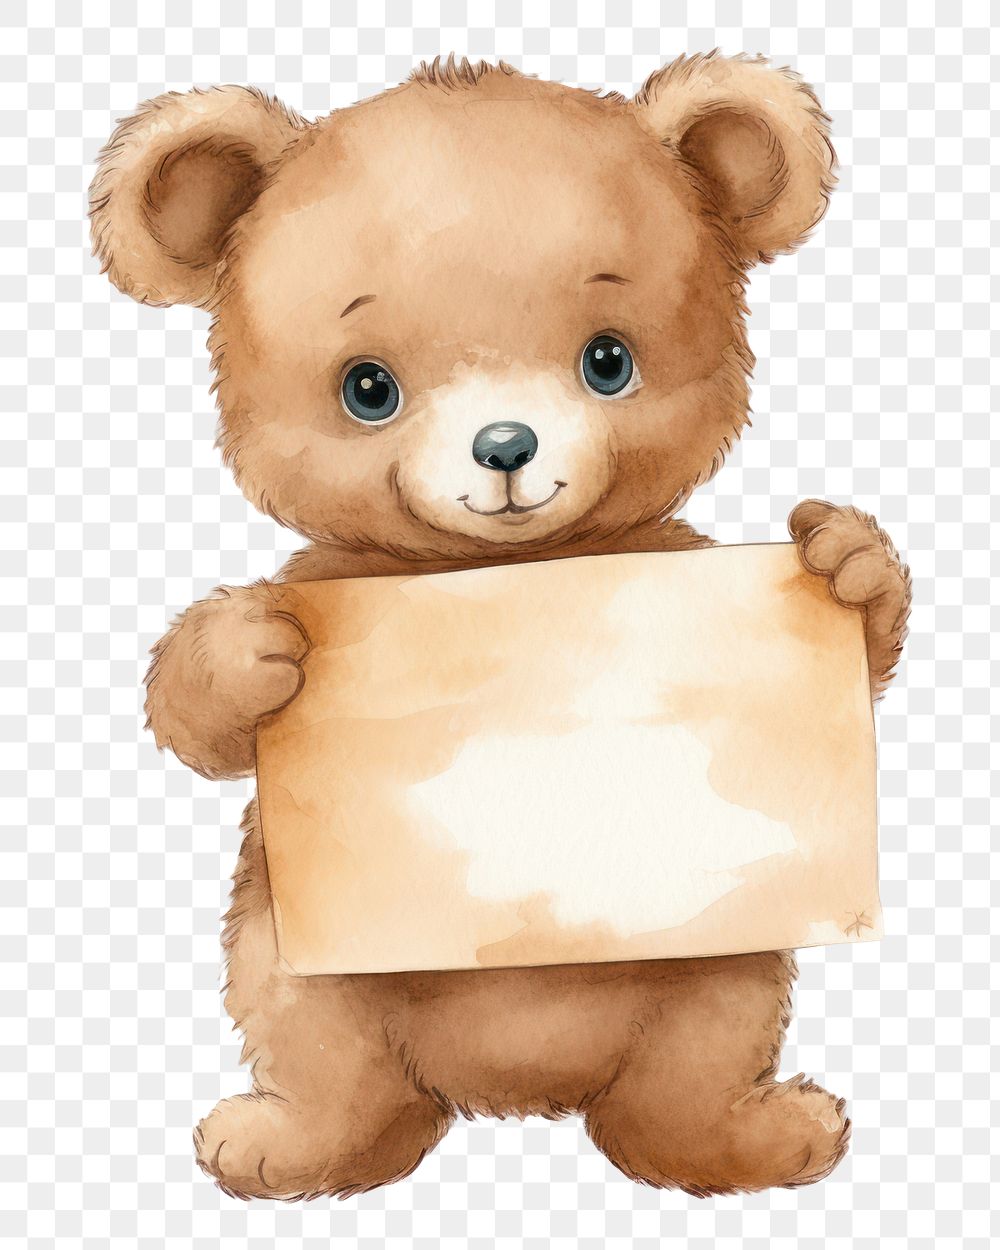 PNG Bear holding blank board cartoon cute baby.